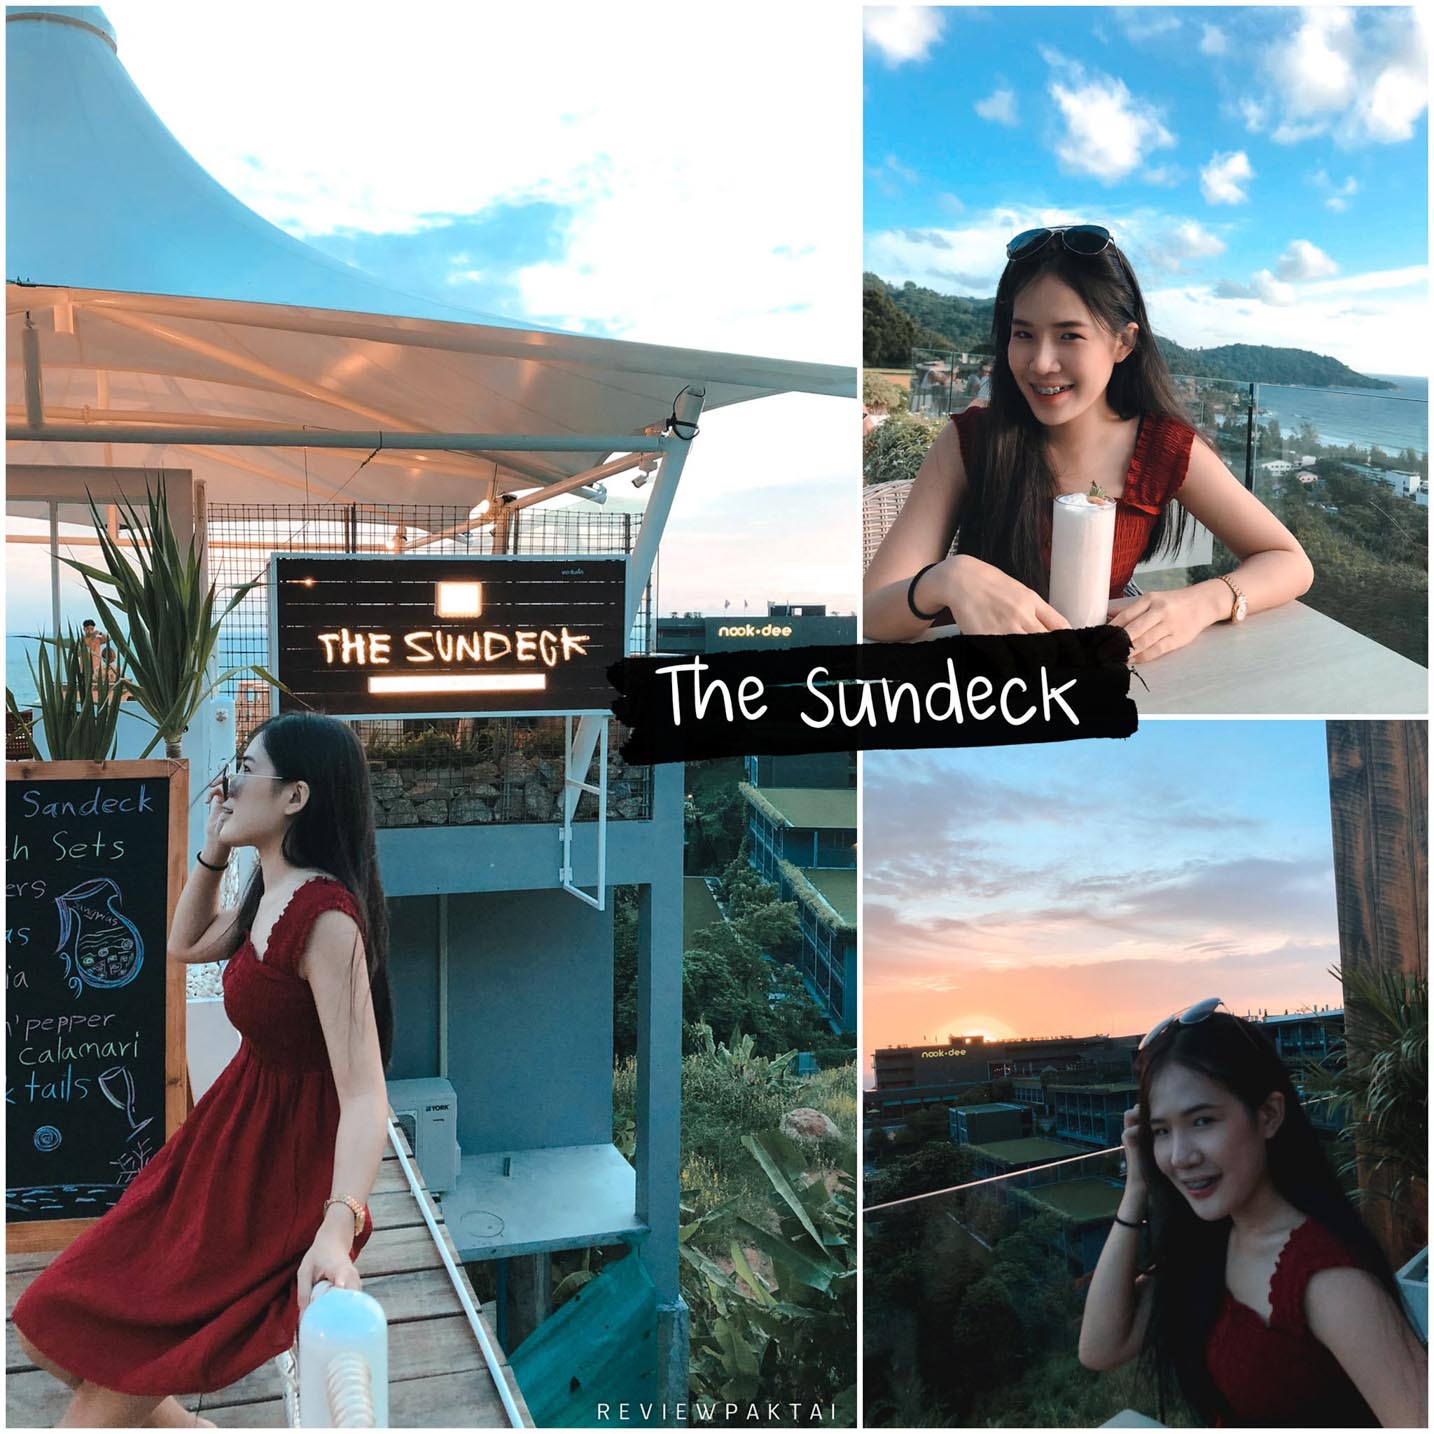 The-sundeck  ภูเก็ต,ที่พัก,โรงแรม,รีสอร์ท,สถานที่ท่องเที่ยว,ของกิน,จุดเช็คอิน,ที่เที่ยว,จุดถ่ายรูป